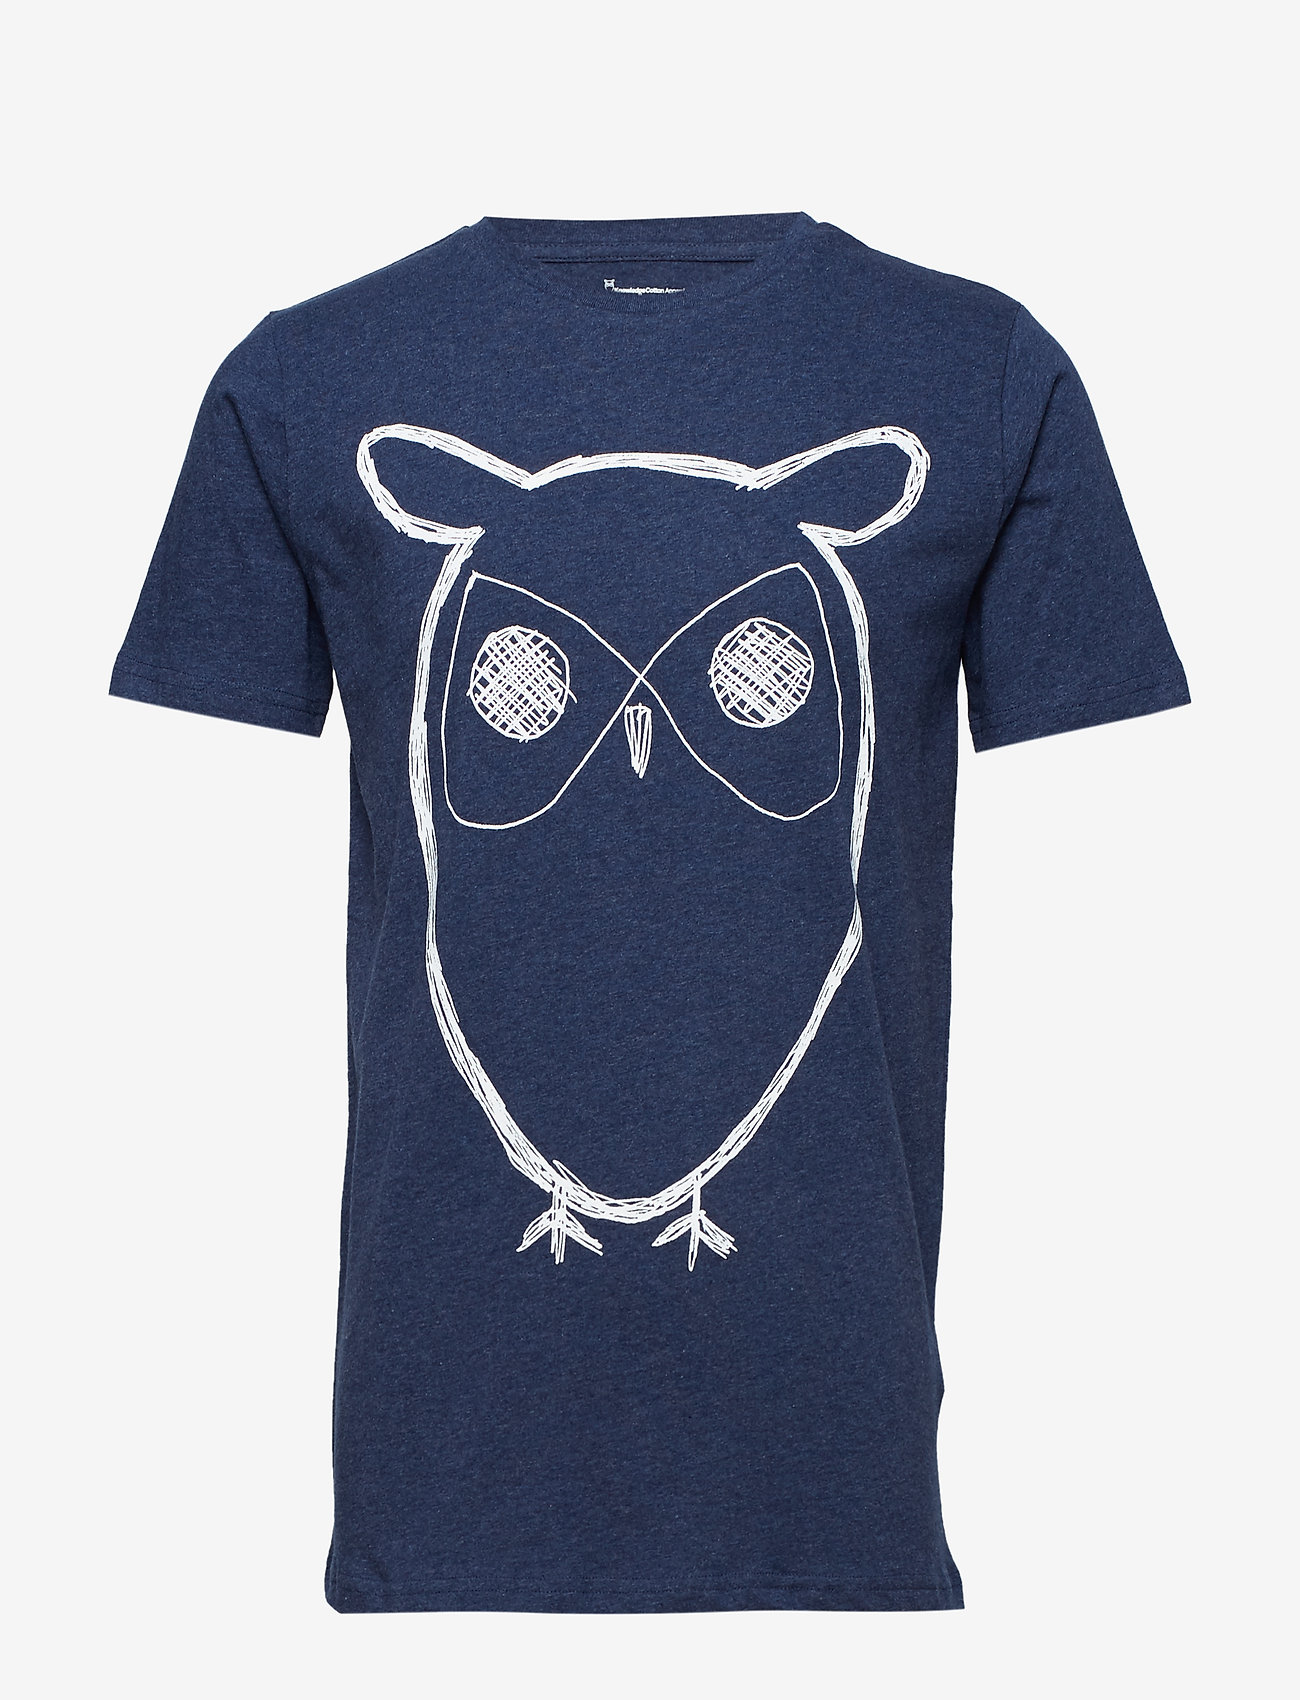 Knowledge Cotton Apparel T Shirt Owl - KnowledgeWalls